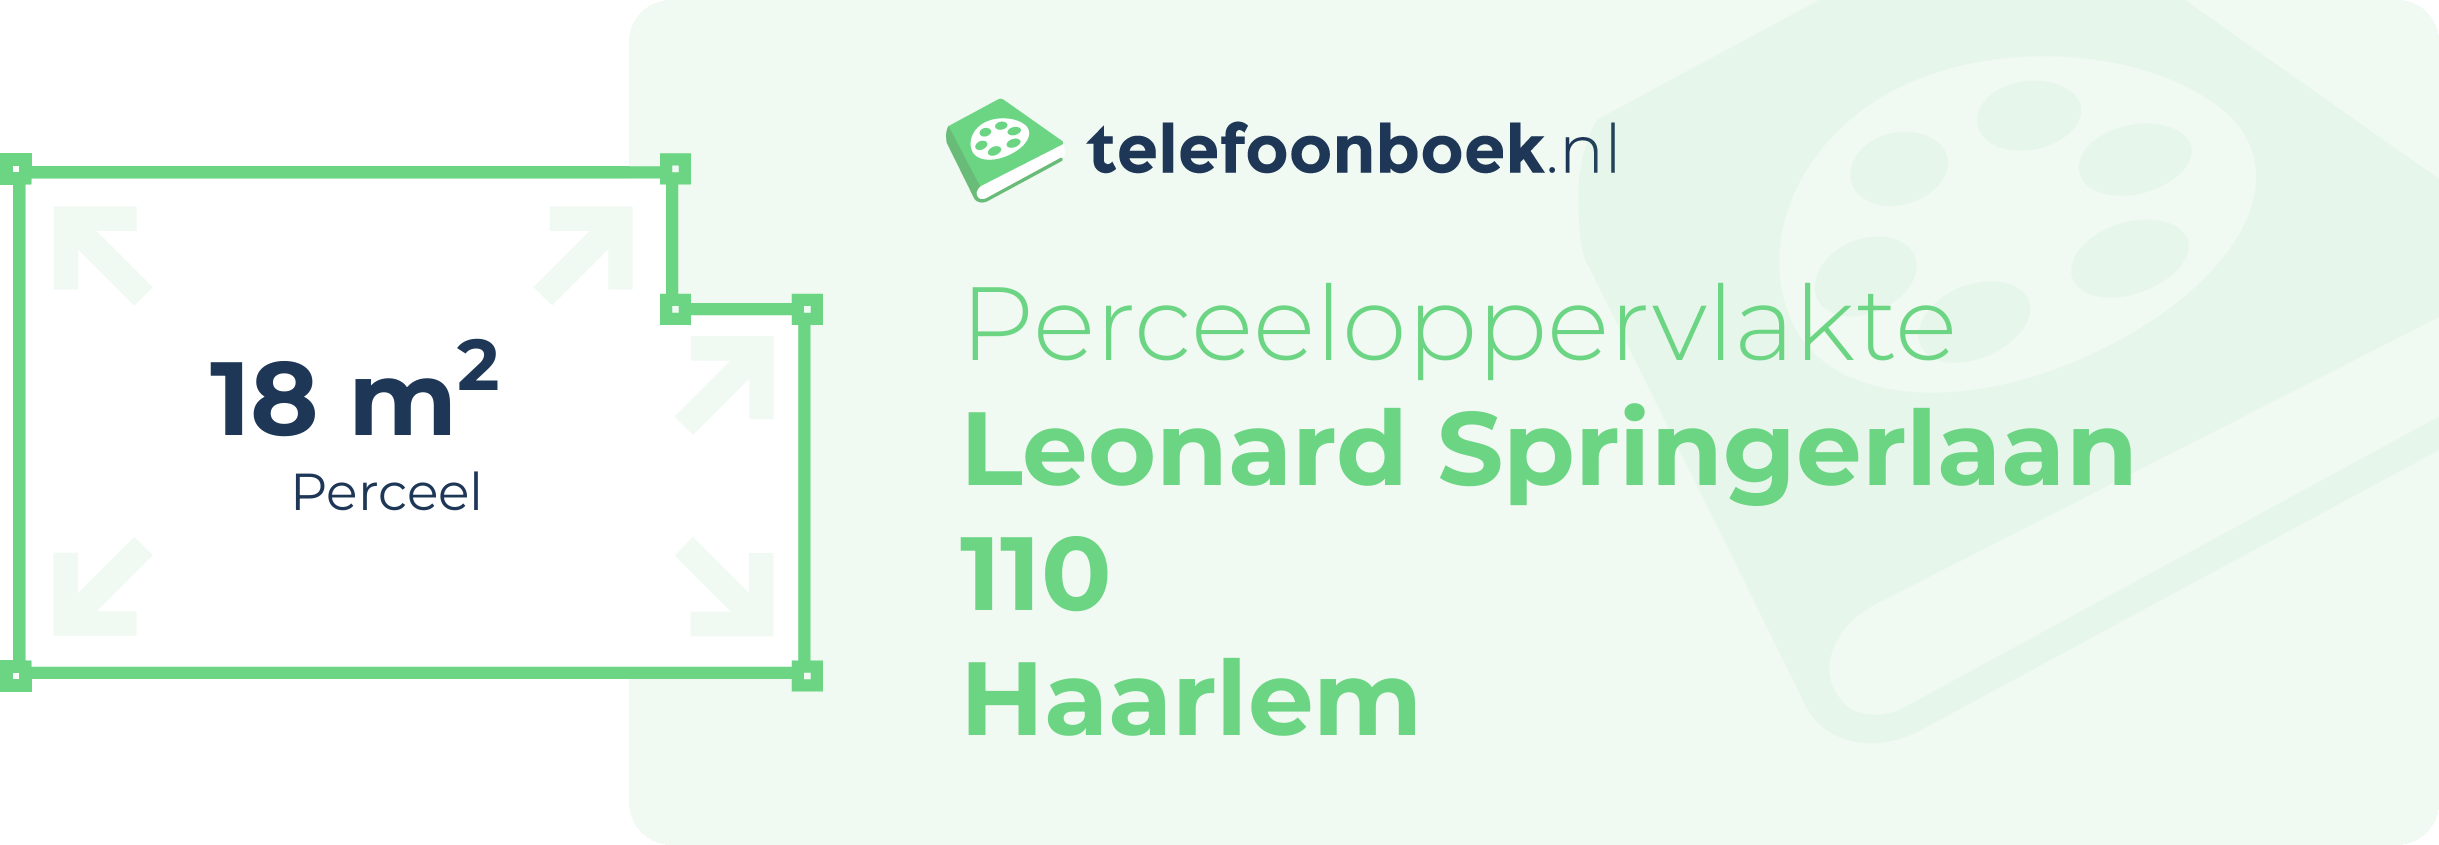 Perceeloppervlakte Leonard Springerlaan 110 Haarlem